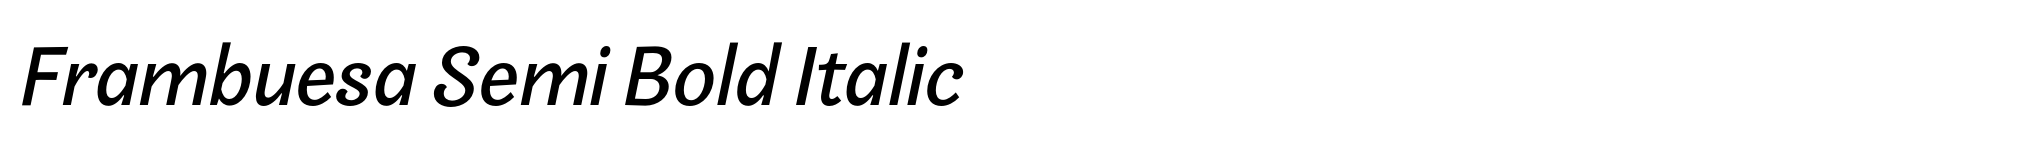 Frambuesa Semi Bold Italic image